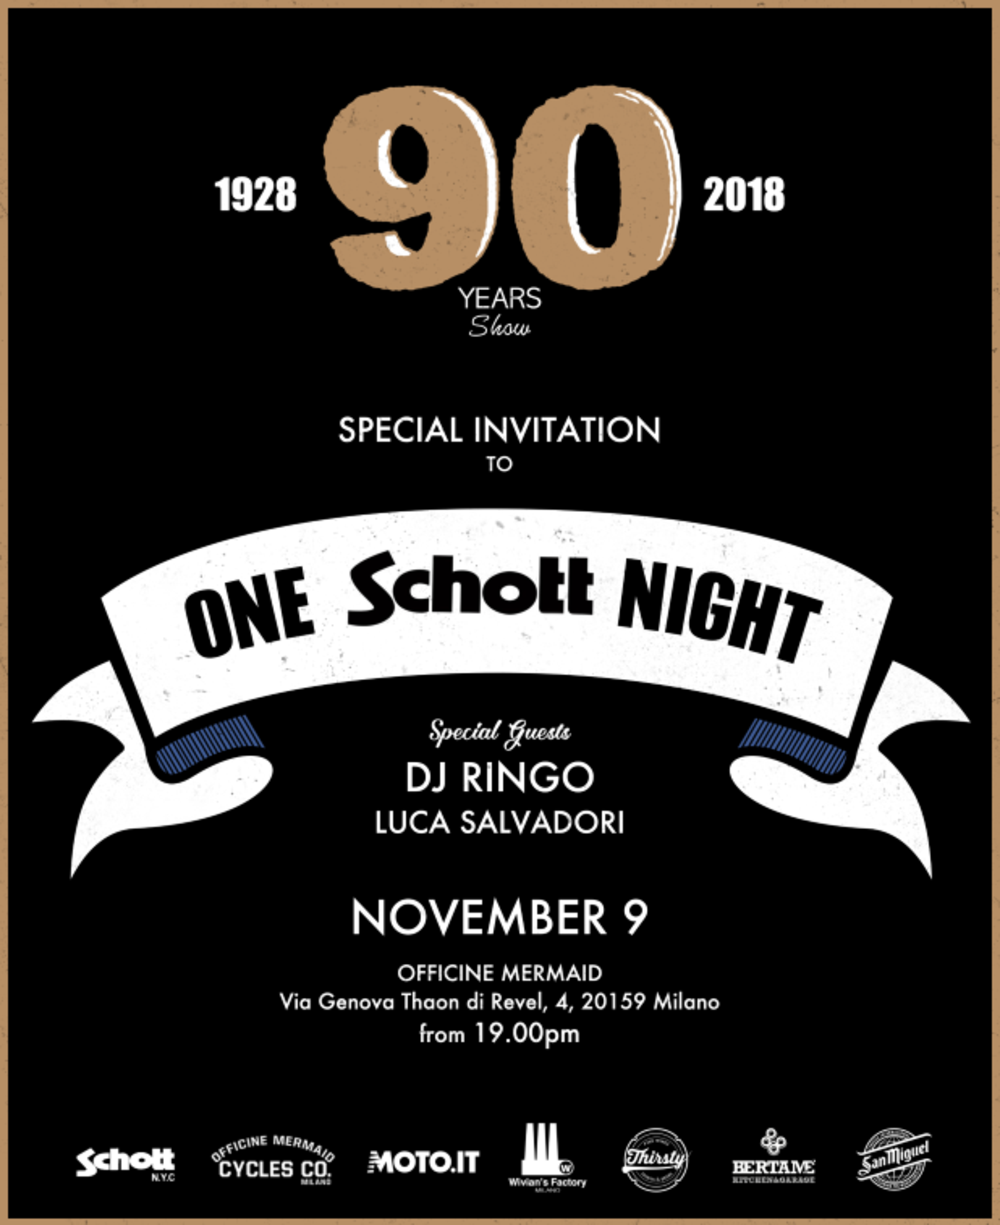 One Schott Night, 9 Novembre: Officine Mermaid Via Thaon de Revel 4   Cocktail Party dalle 20 presso le Officine Mermaid in collaborazione con Schott.